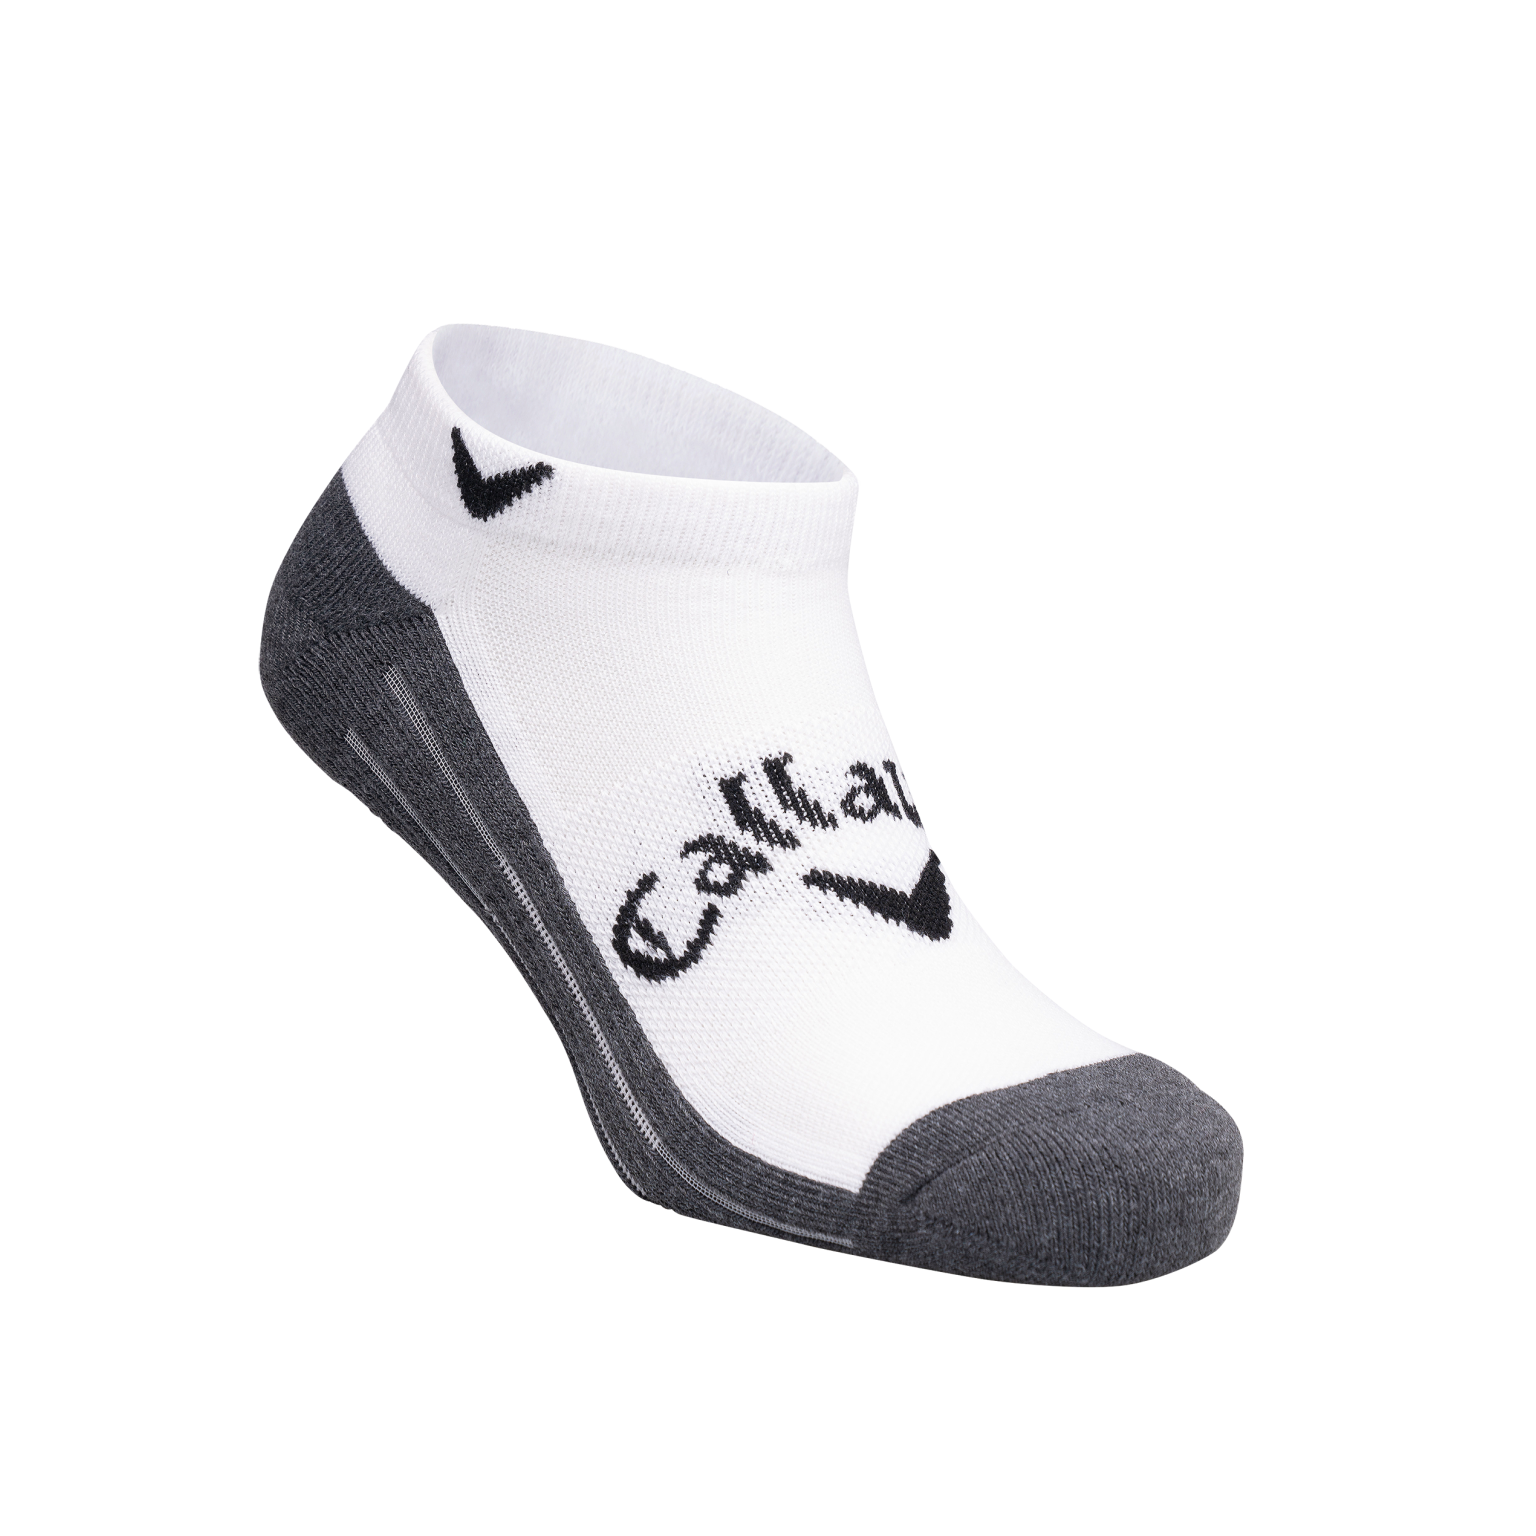 Callaway Tour Opti-Dri Low II pánské golfové ponožky, bílé/šedé, vel. L/XL